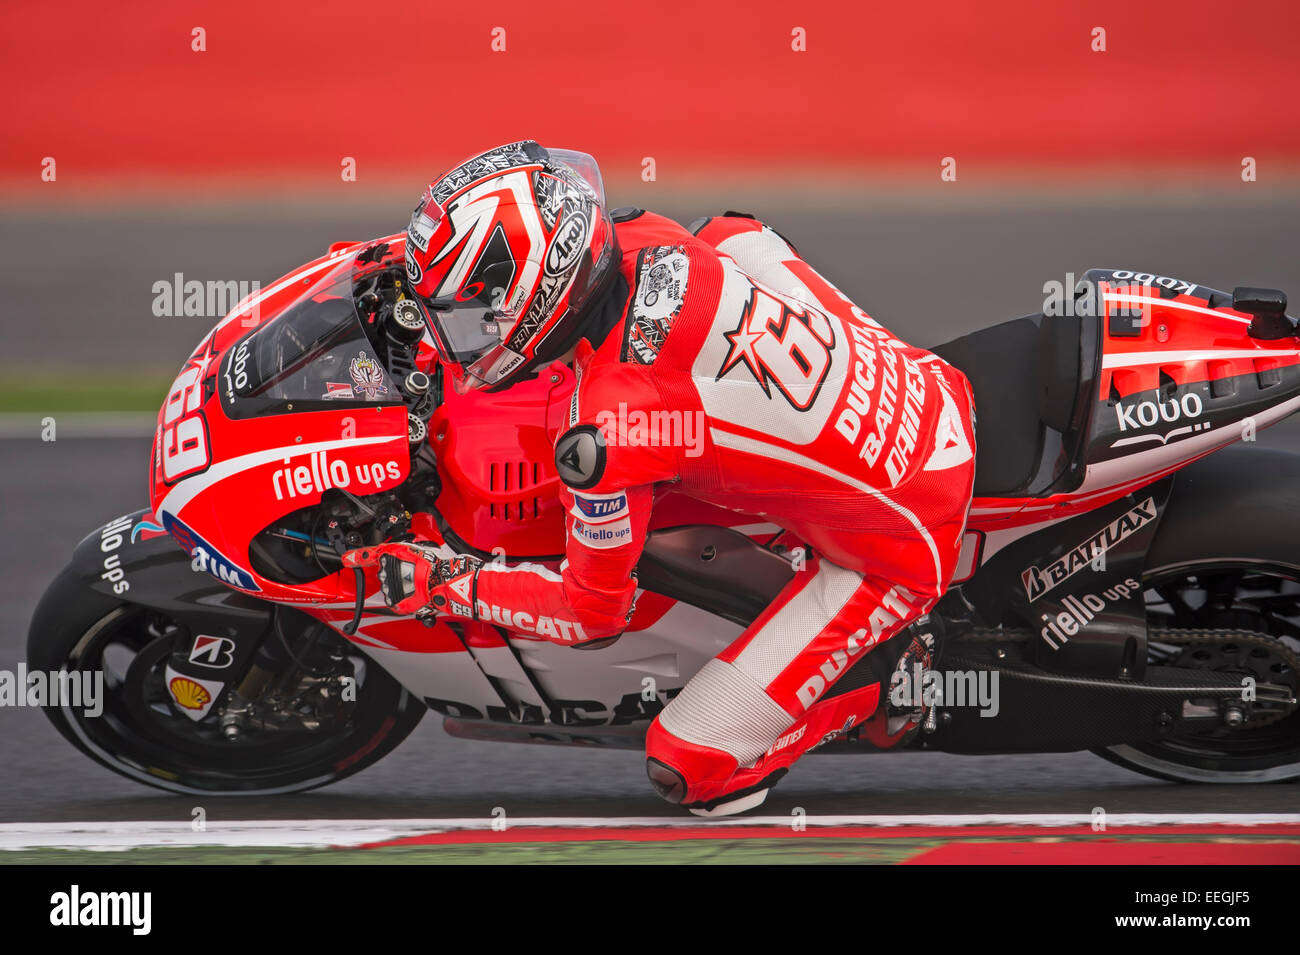 Nicky Hayden, 69, Ducati, 2013 Foto stock - Alamy